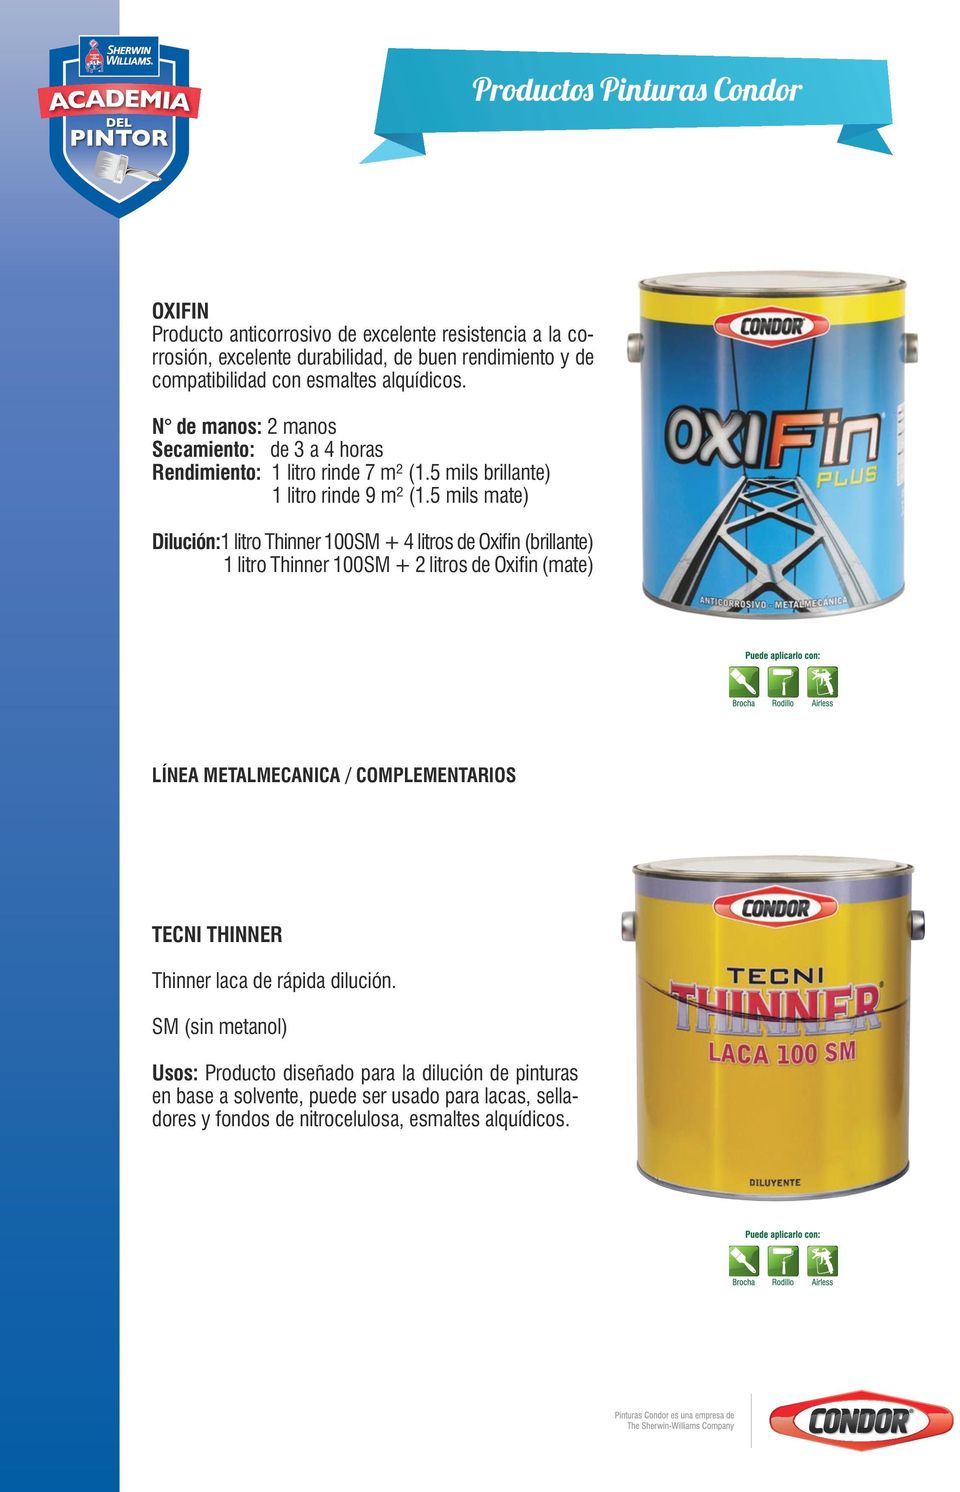 5 mils mate) Dilución:1 litro Thinner 100SM + 4 litros de Oxifin (brillante) 1 litro Thinner 100SM + 2 litros de Oxifin (mate) LÍNEA METALMECANICA /